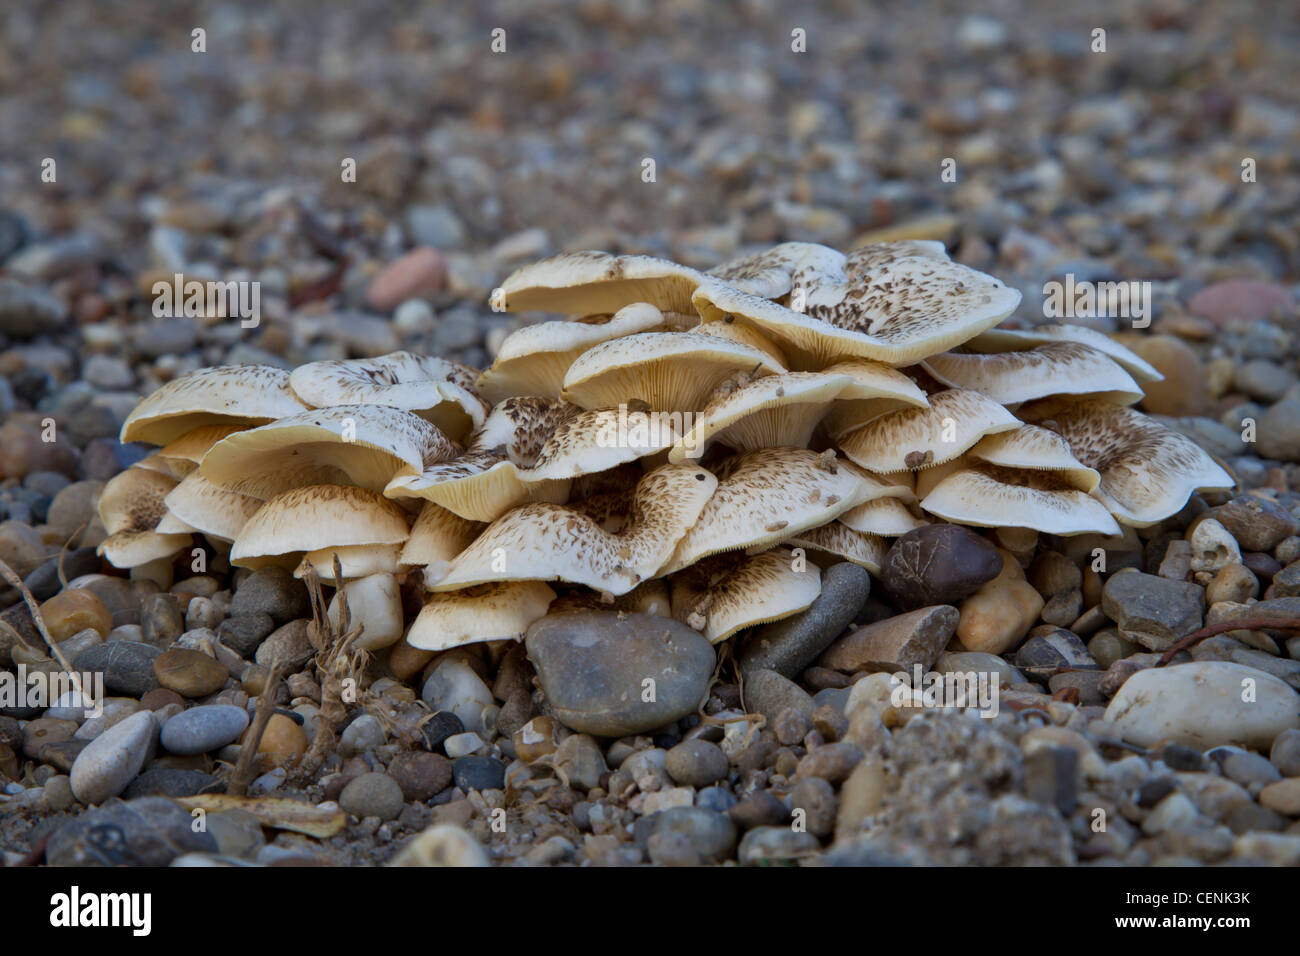 Pilz, mushroom Stock Photo